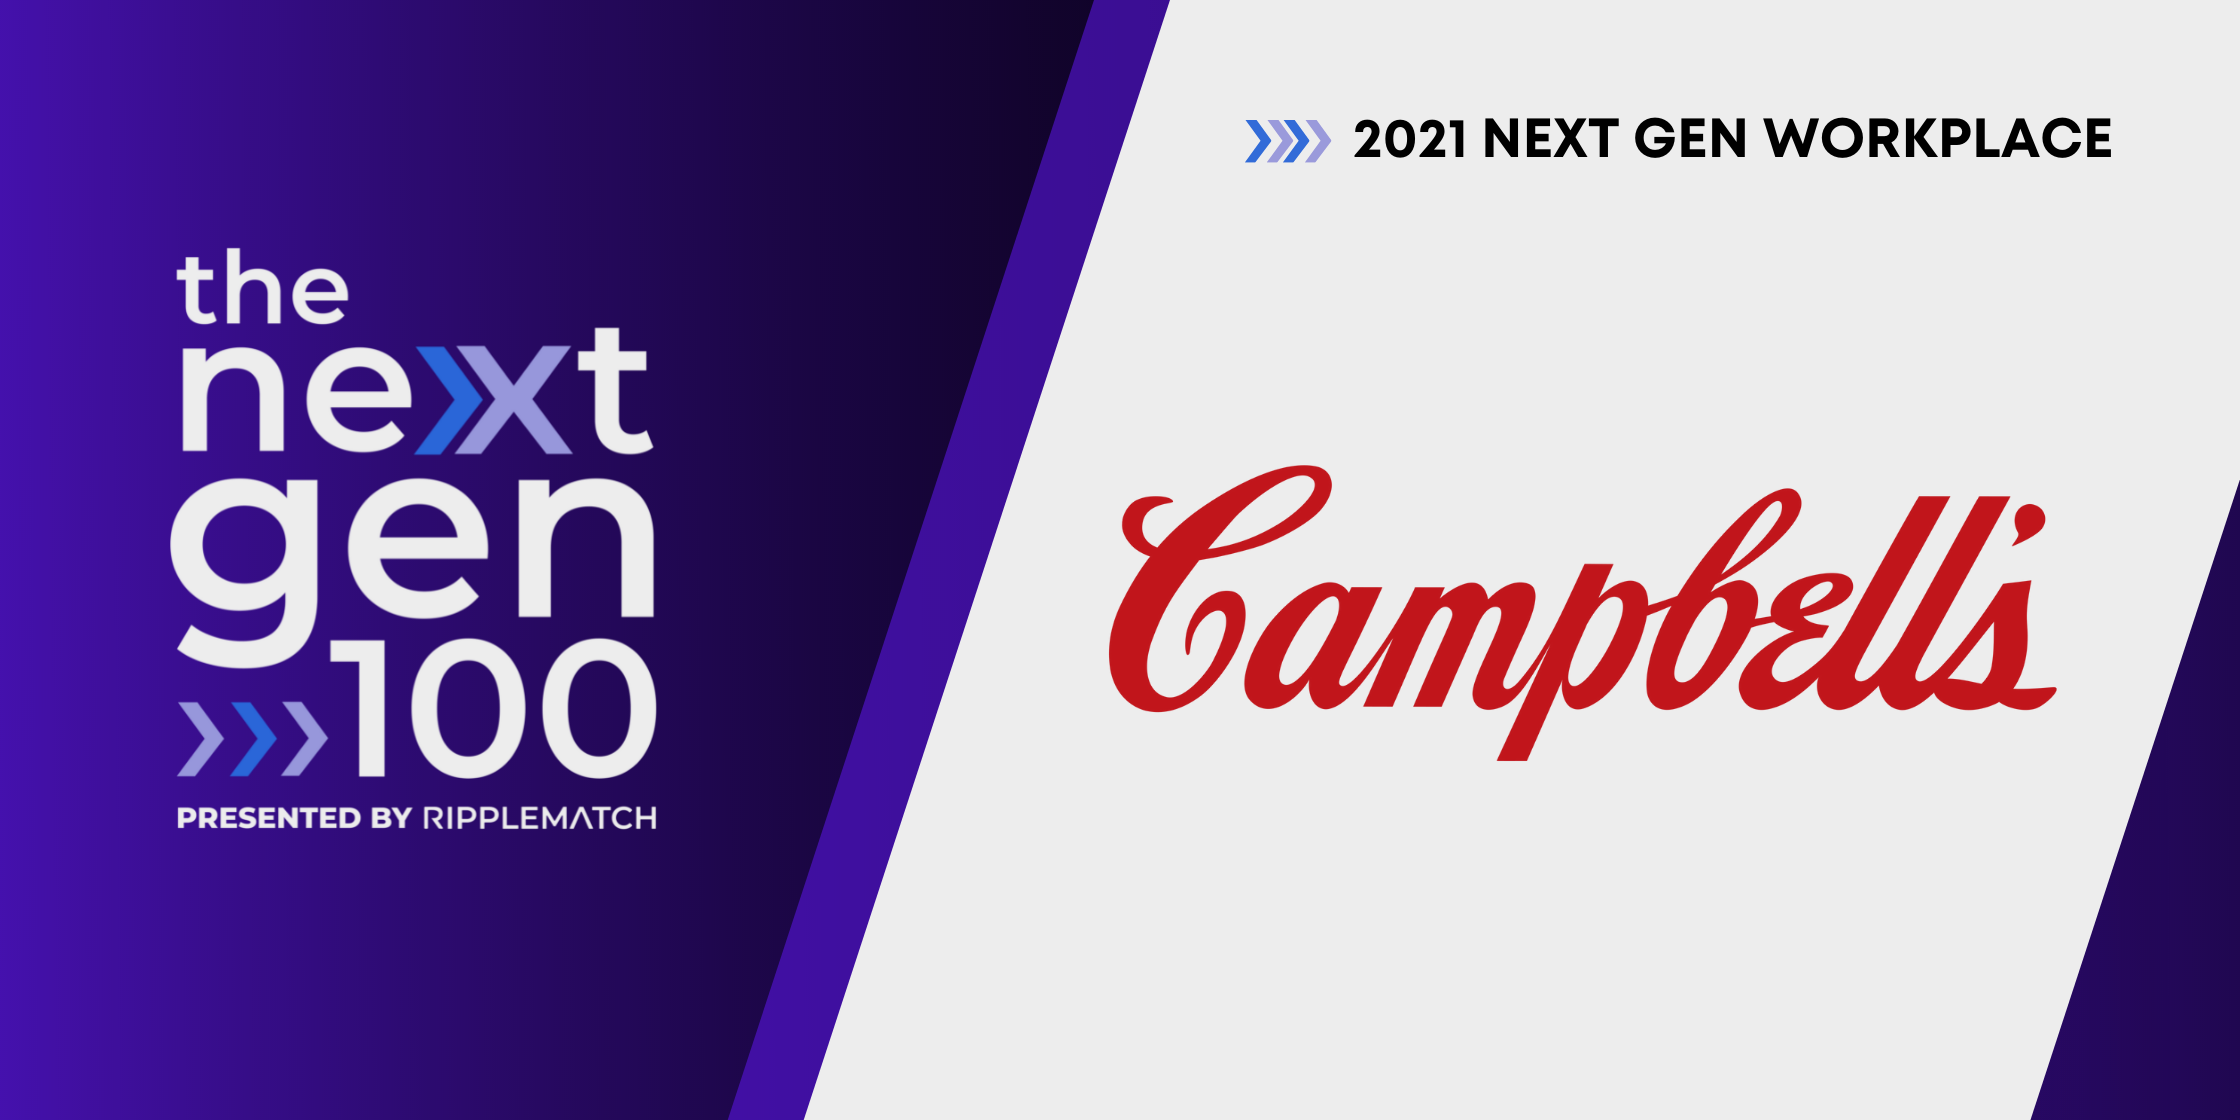 Campbell Sou Company logo - Landing page & social image